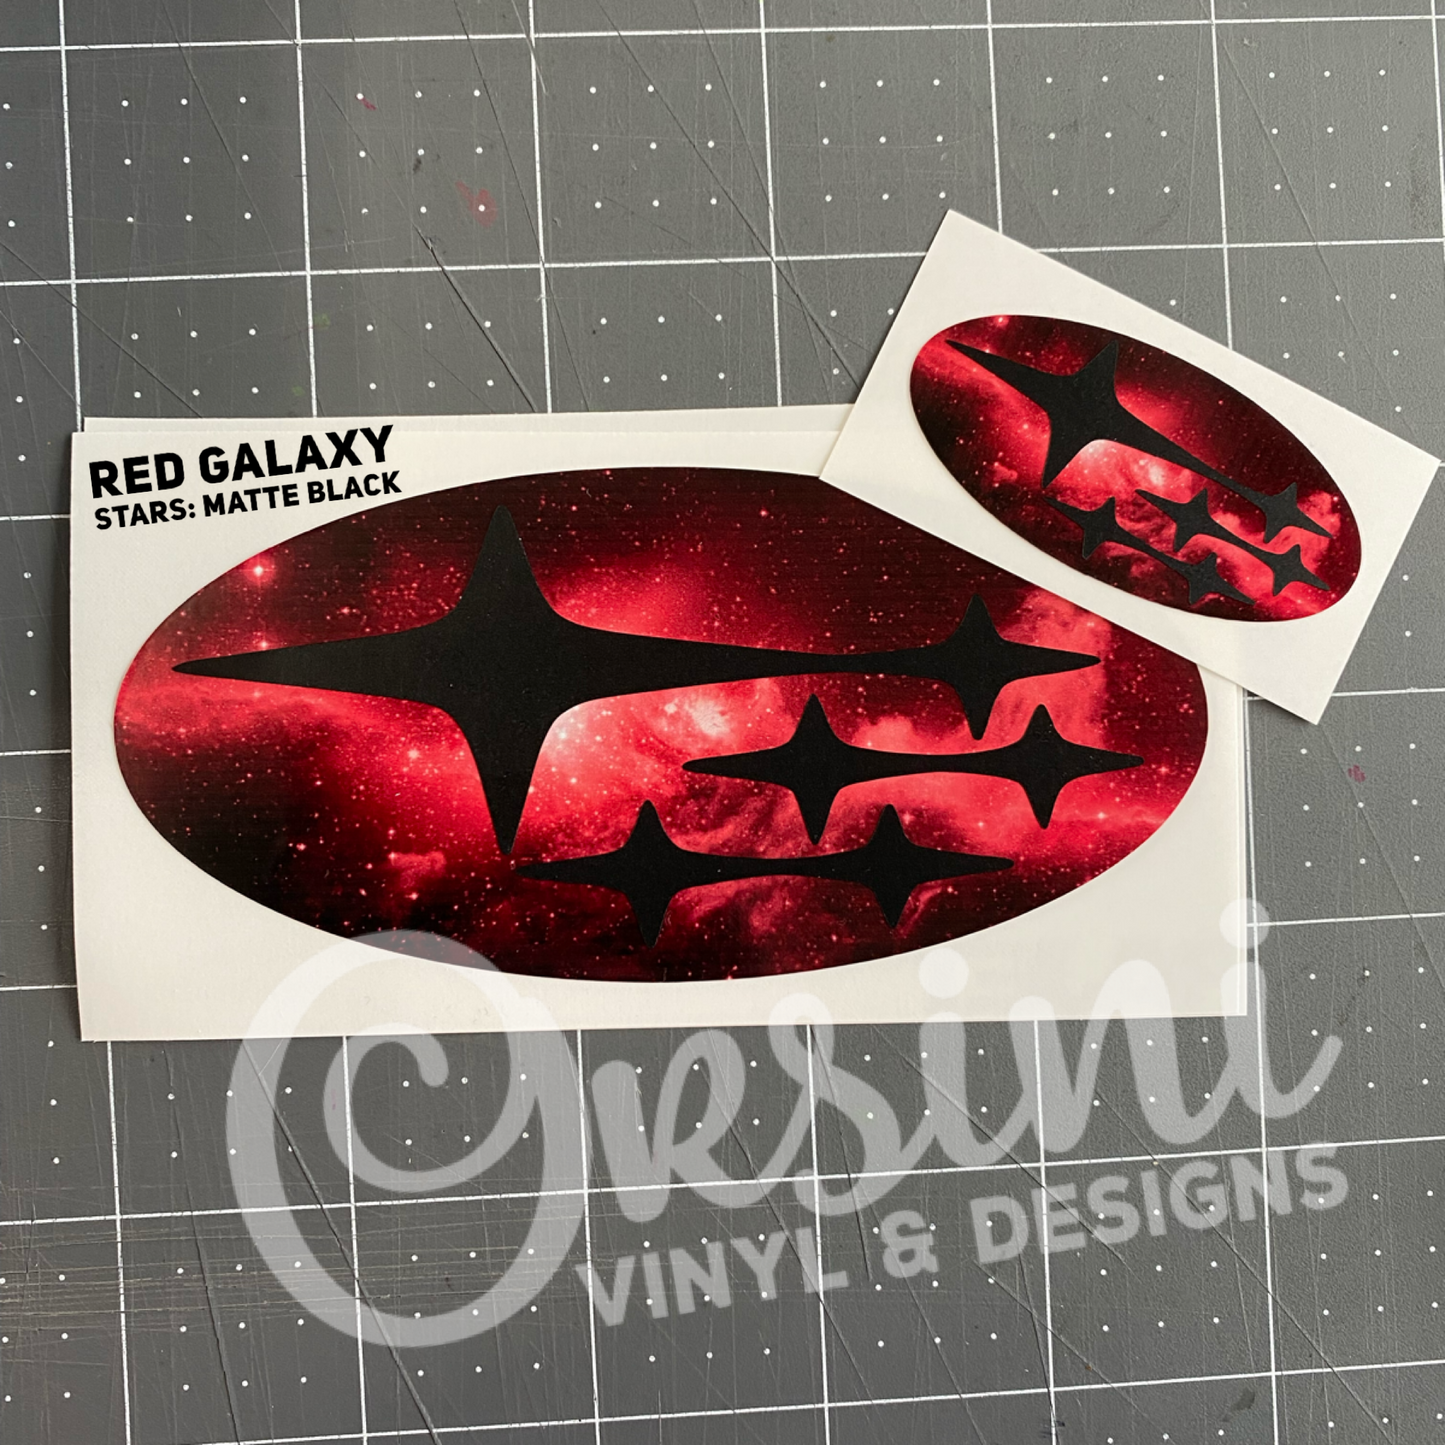 Red Galaxy (Printed Vinyl) Emblem Overlay Decal Set